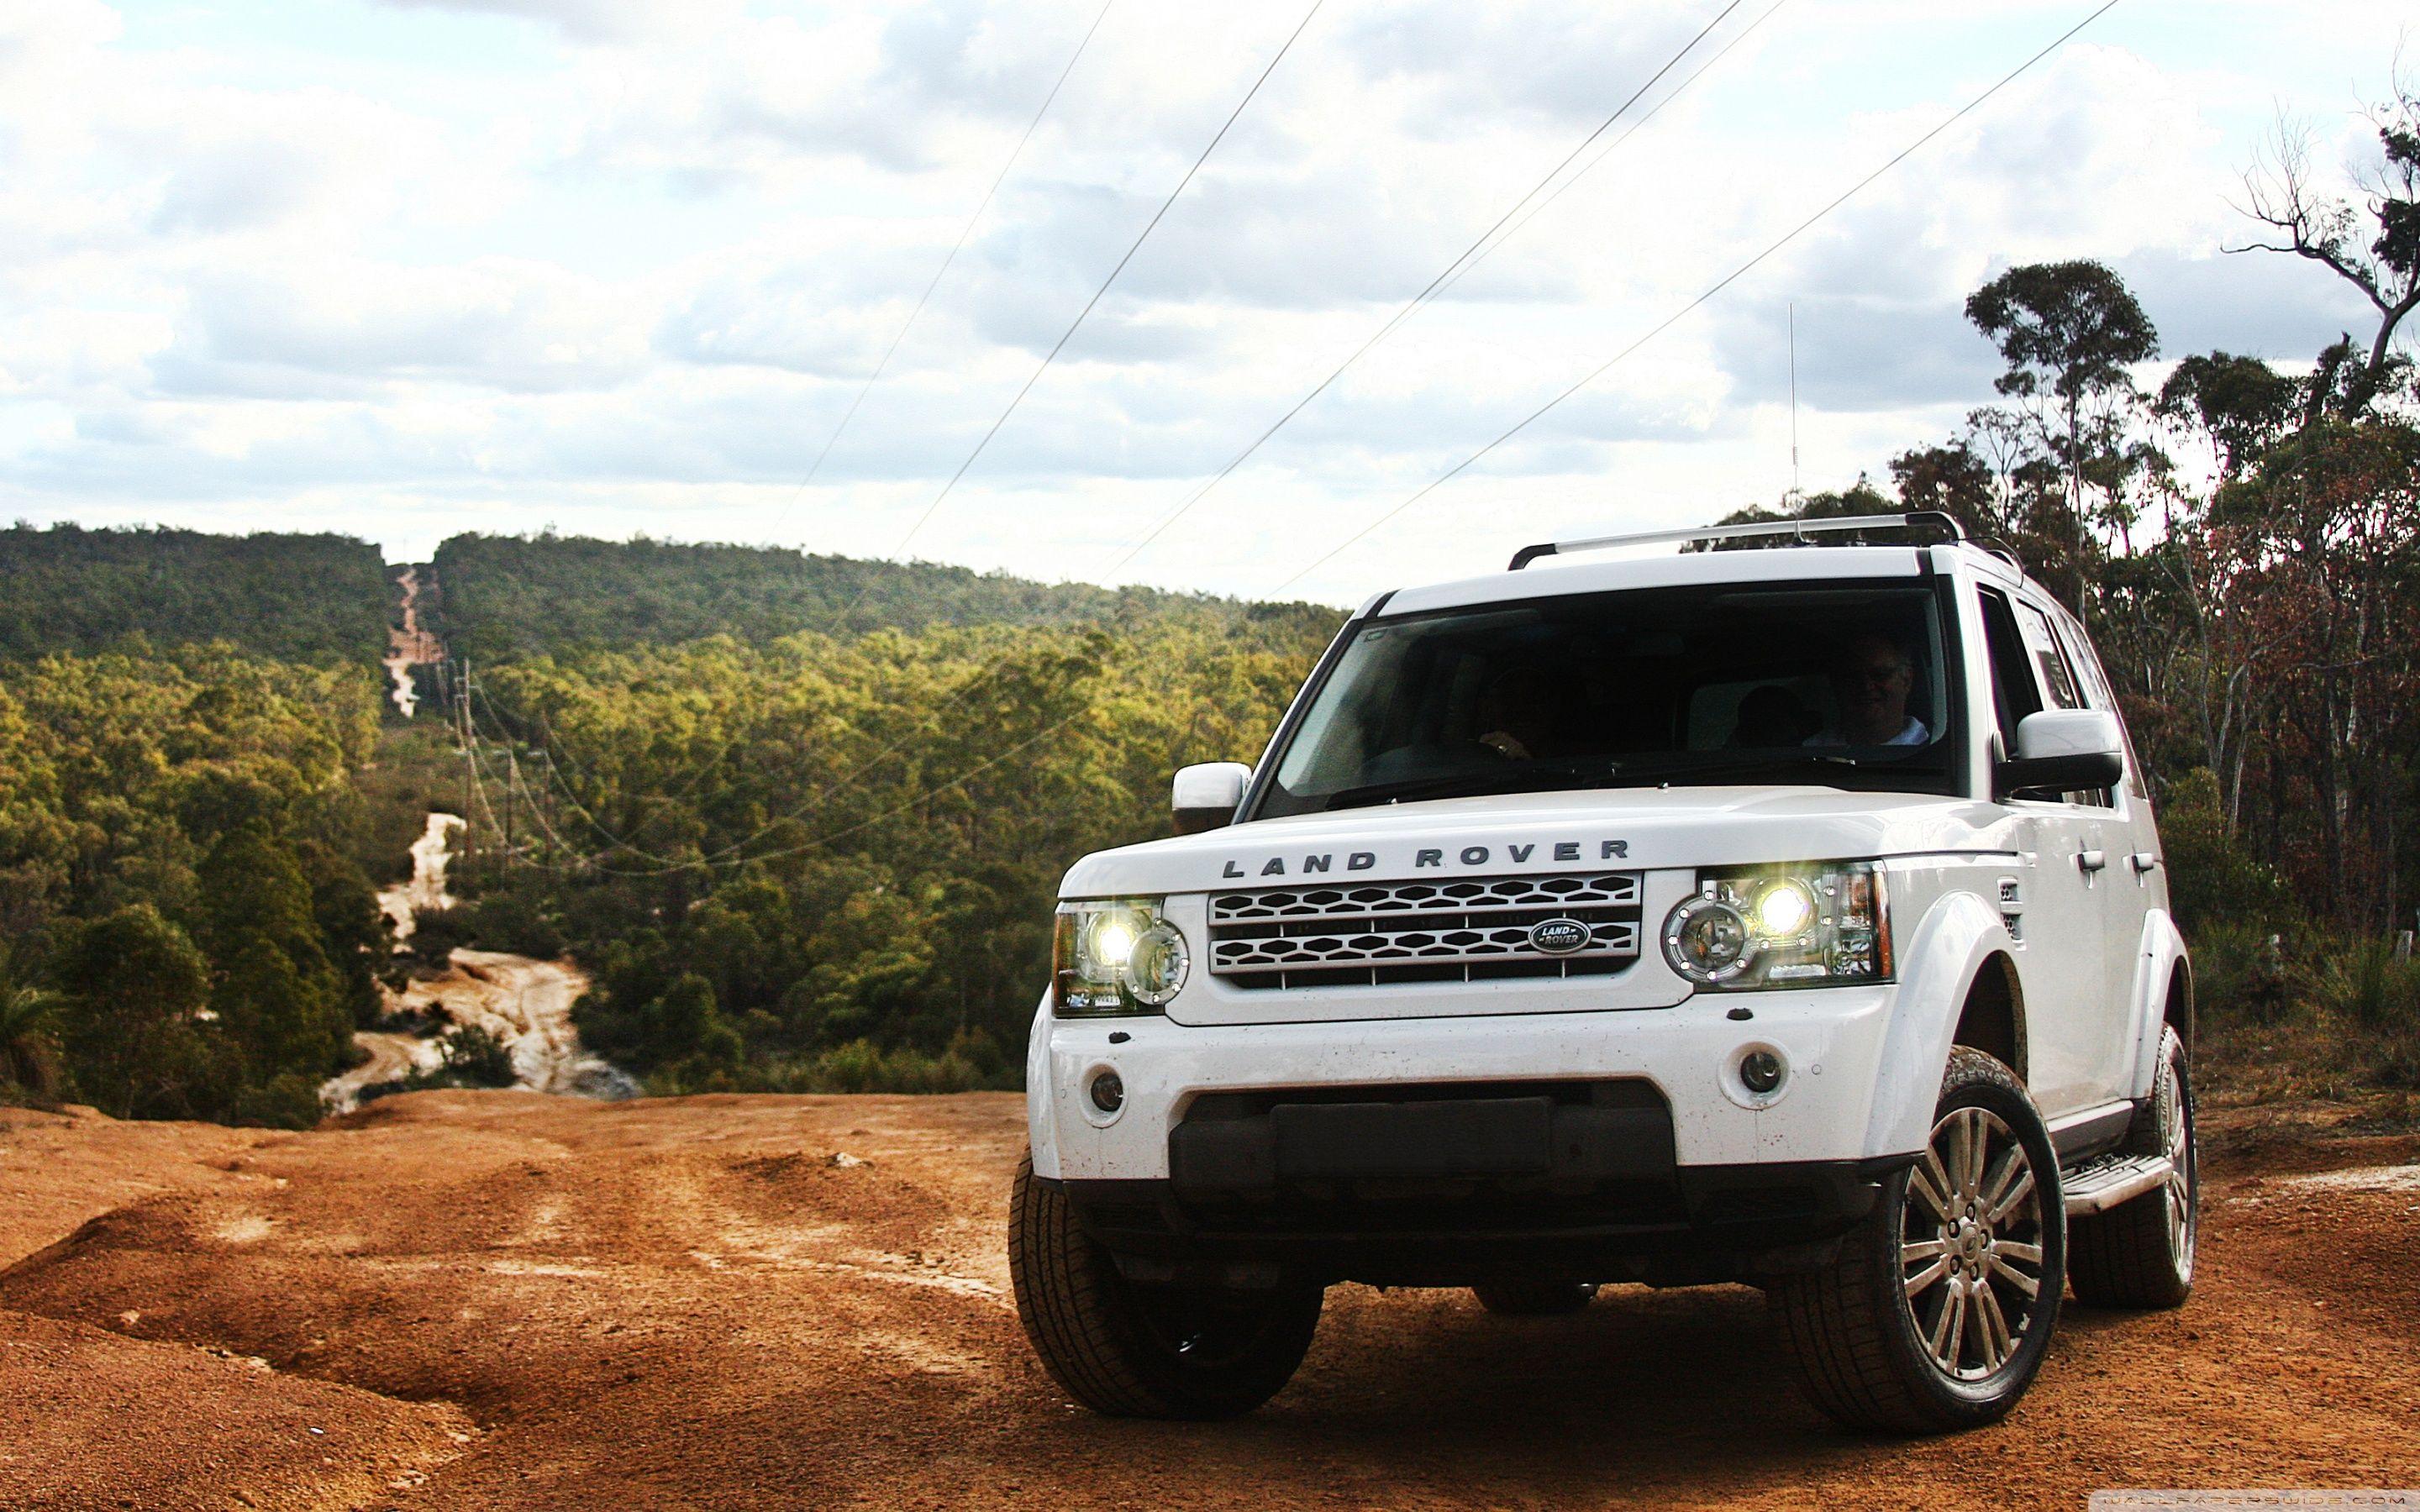 Land Rover Discovery 4 White ❤ 4K HD Desktop Wallpaper for 4K Ultra